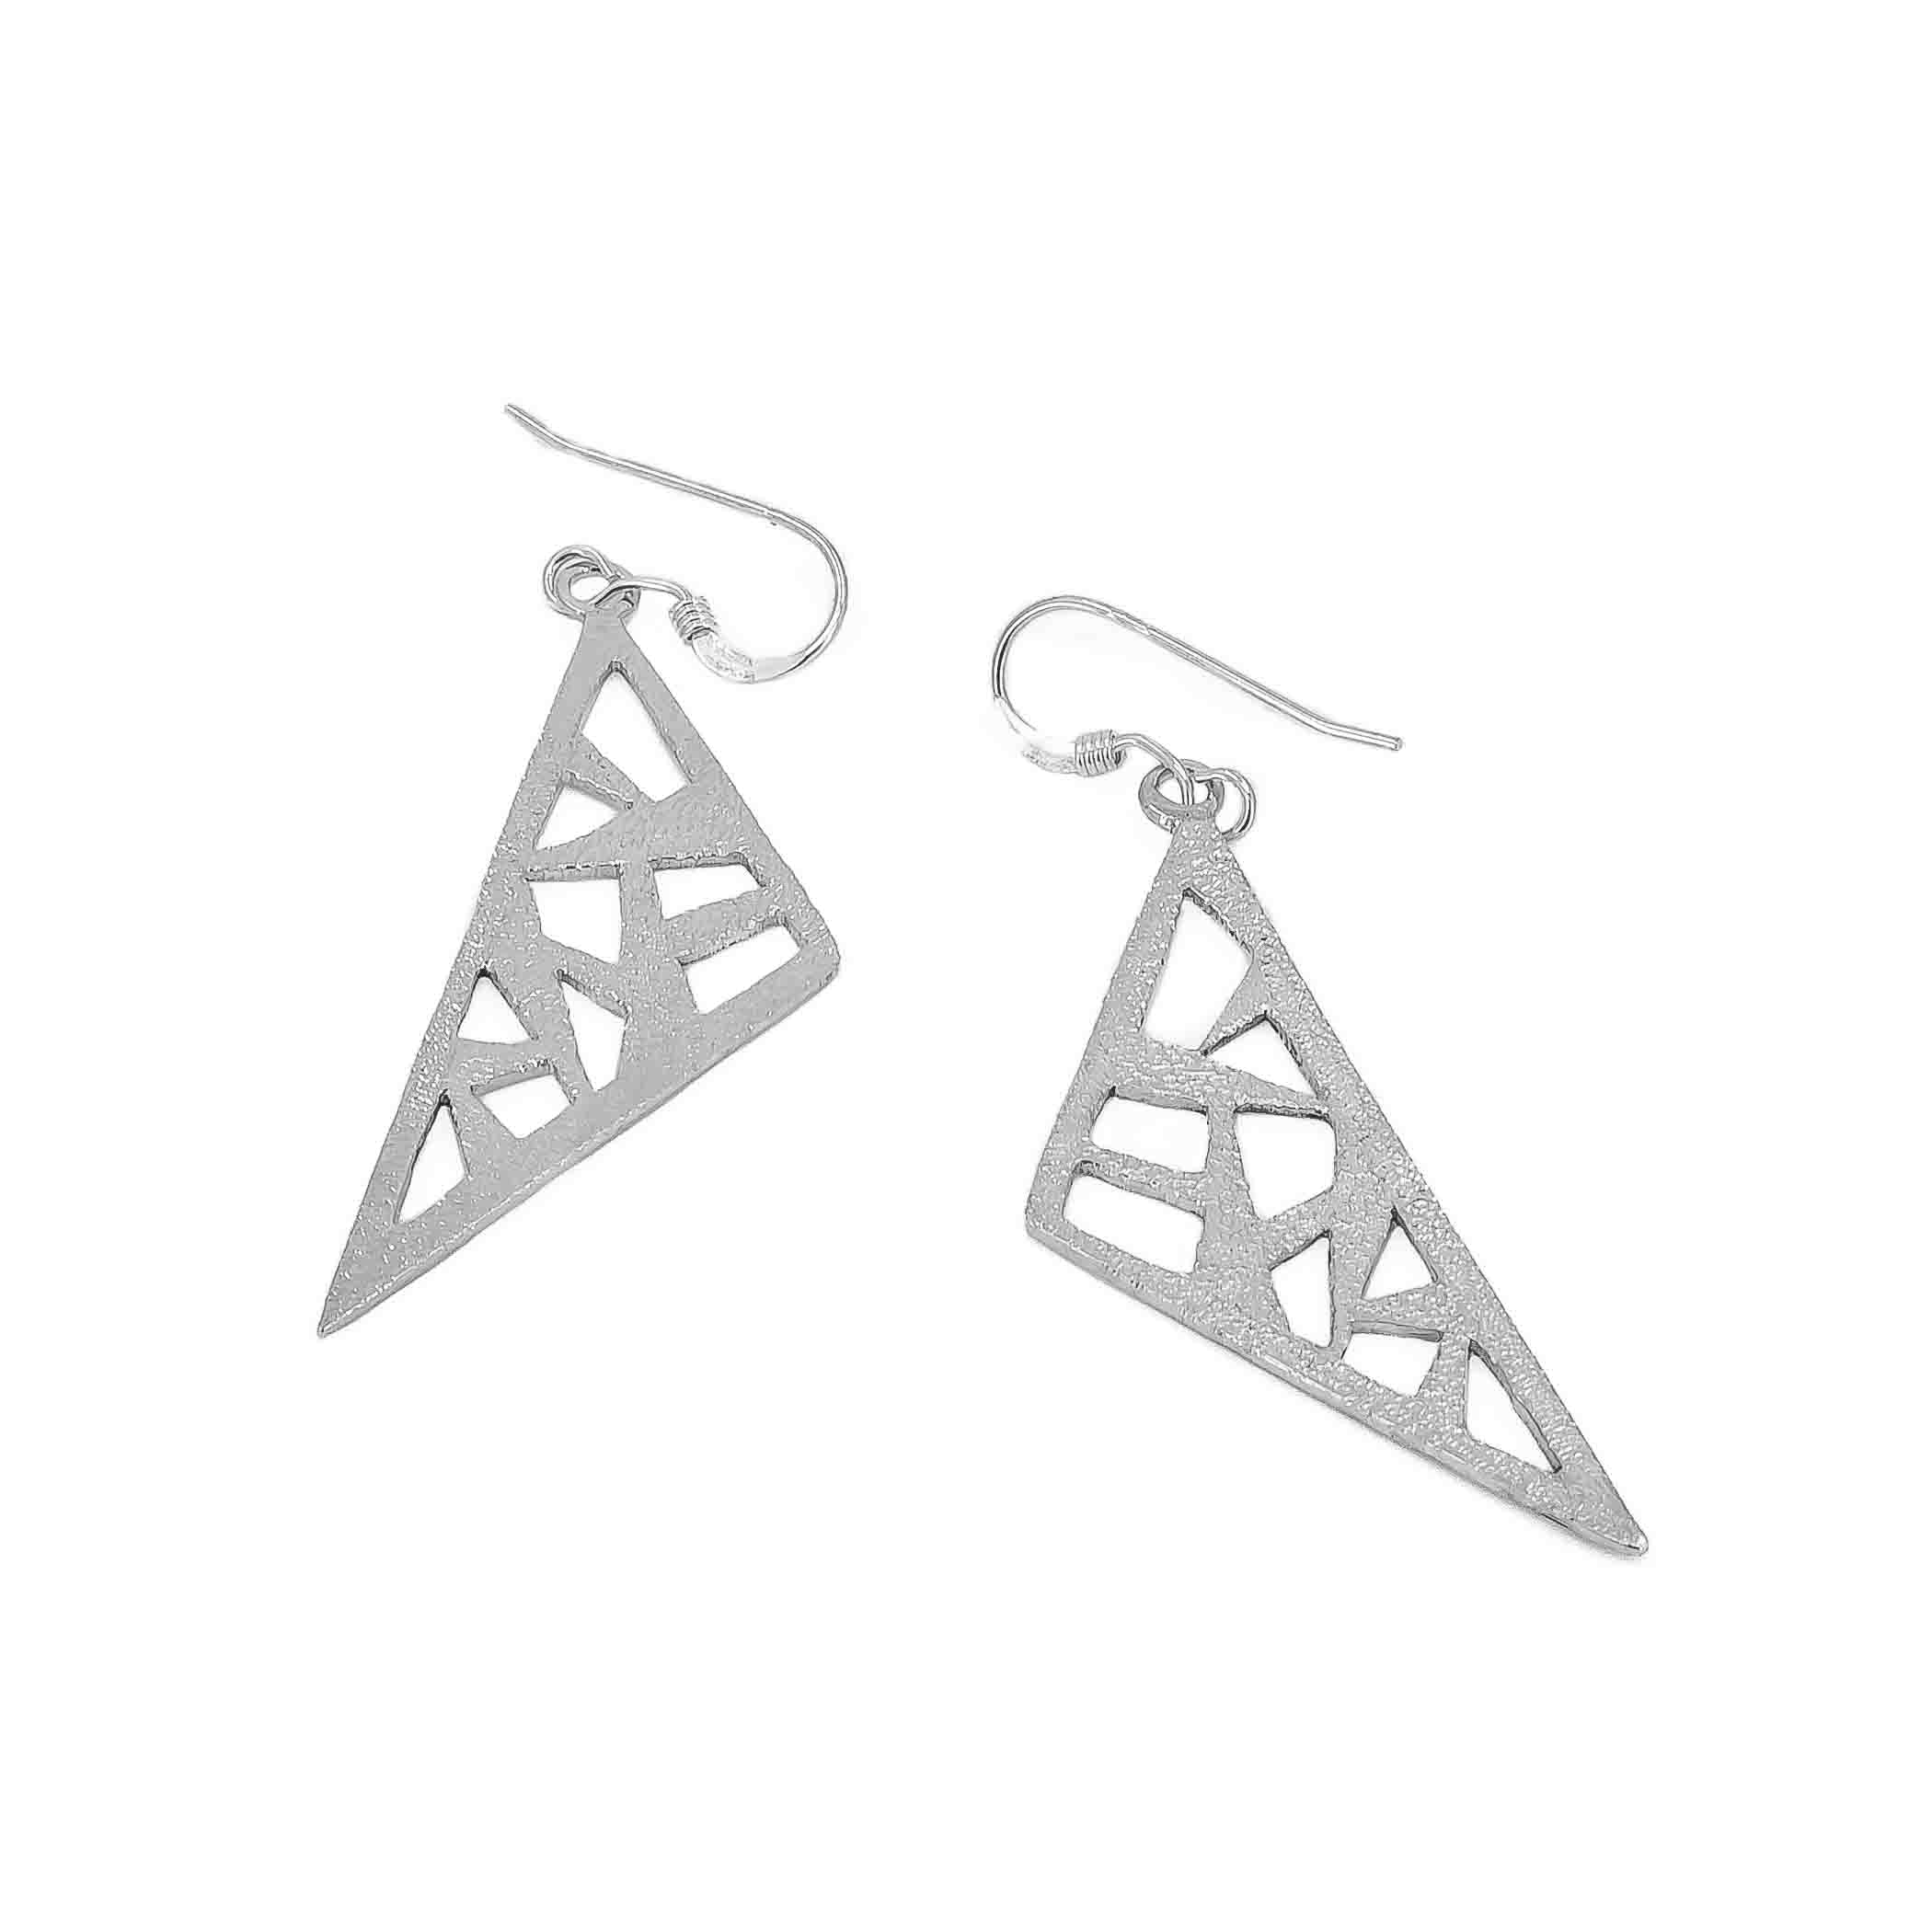 Triangle dangle earrings in sterling silver pierced with a modern design